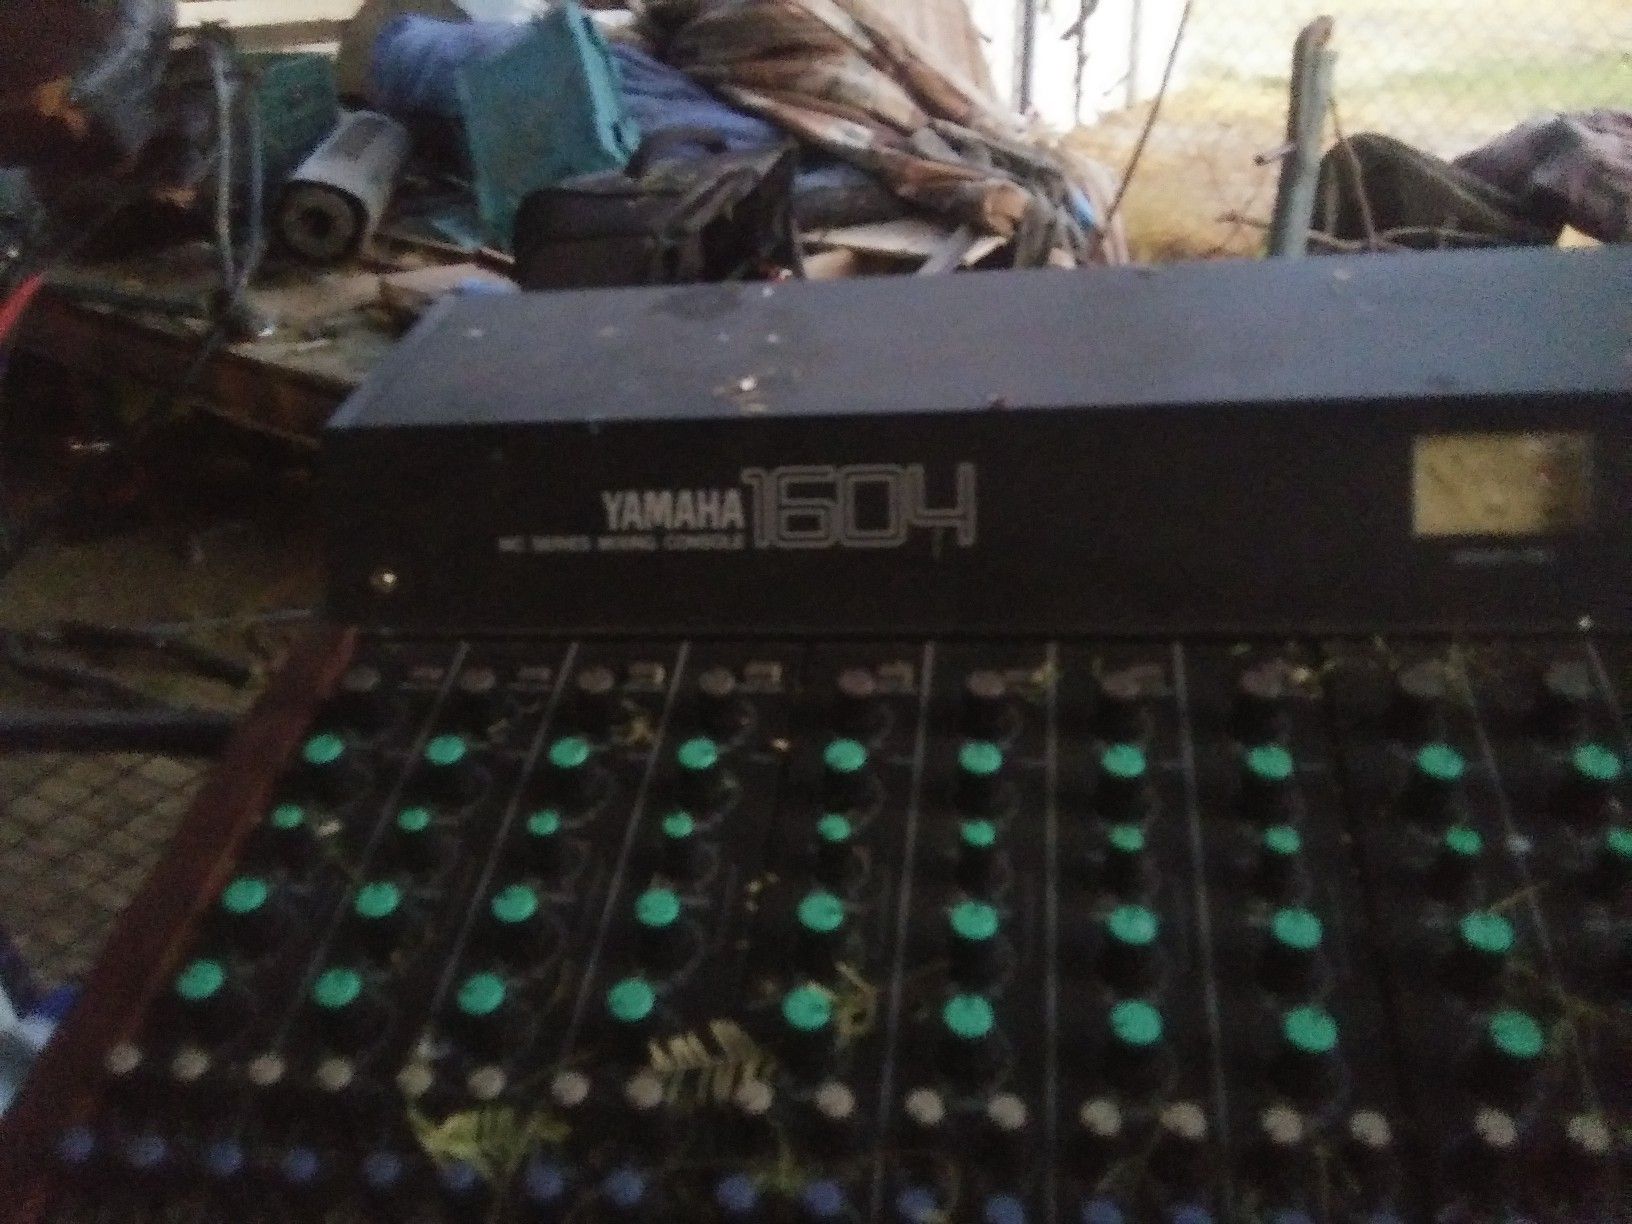 Yamaha mixing board